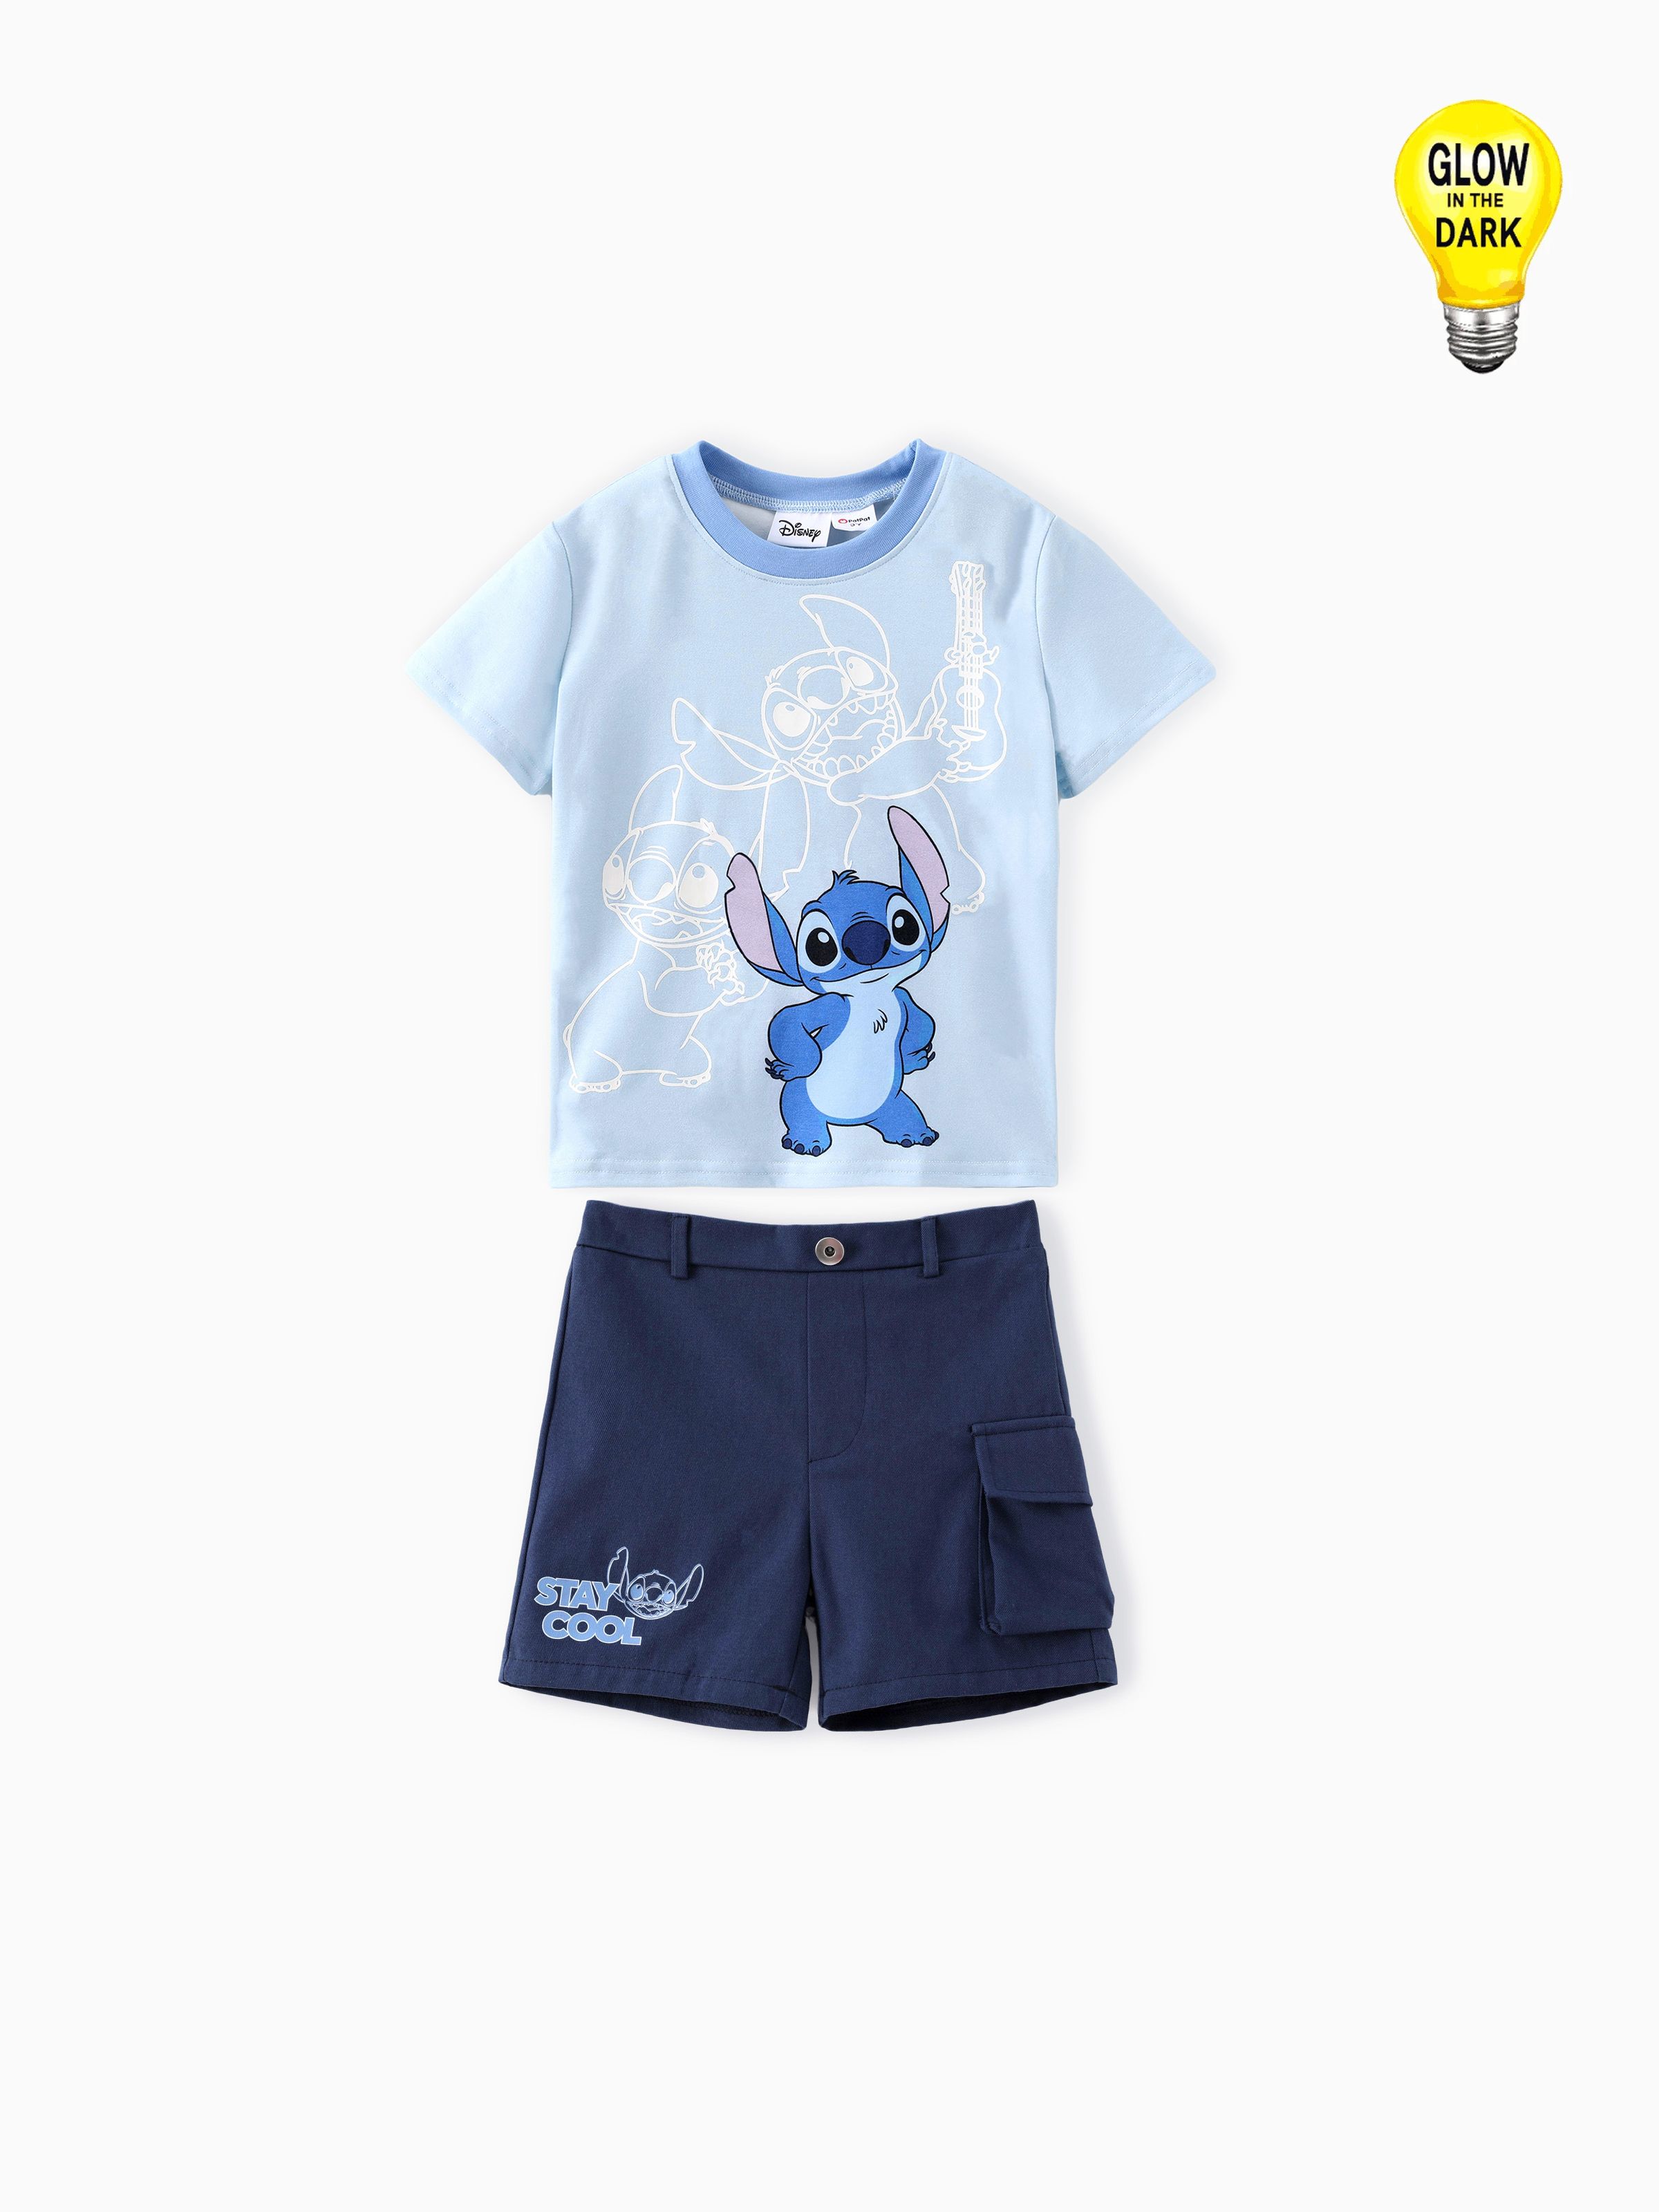 

Disney Stitch Toddler Boys 2pcs Stitch Character Print Tee with Cotton Shorts Set